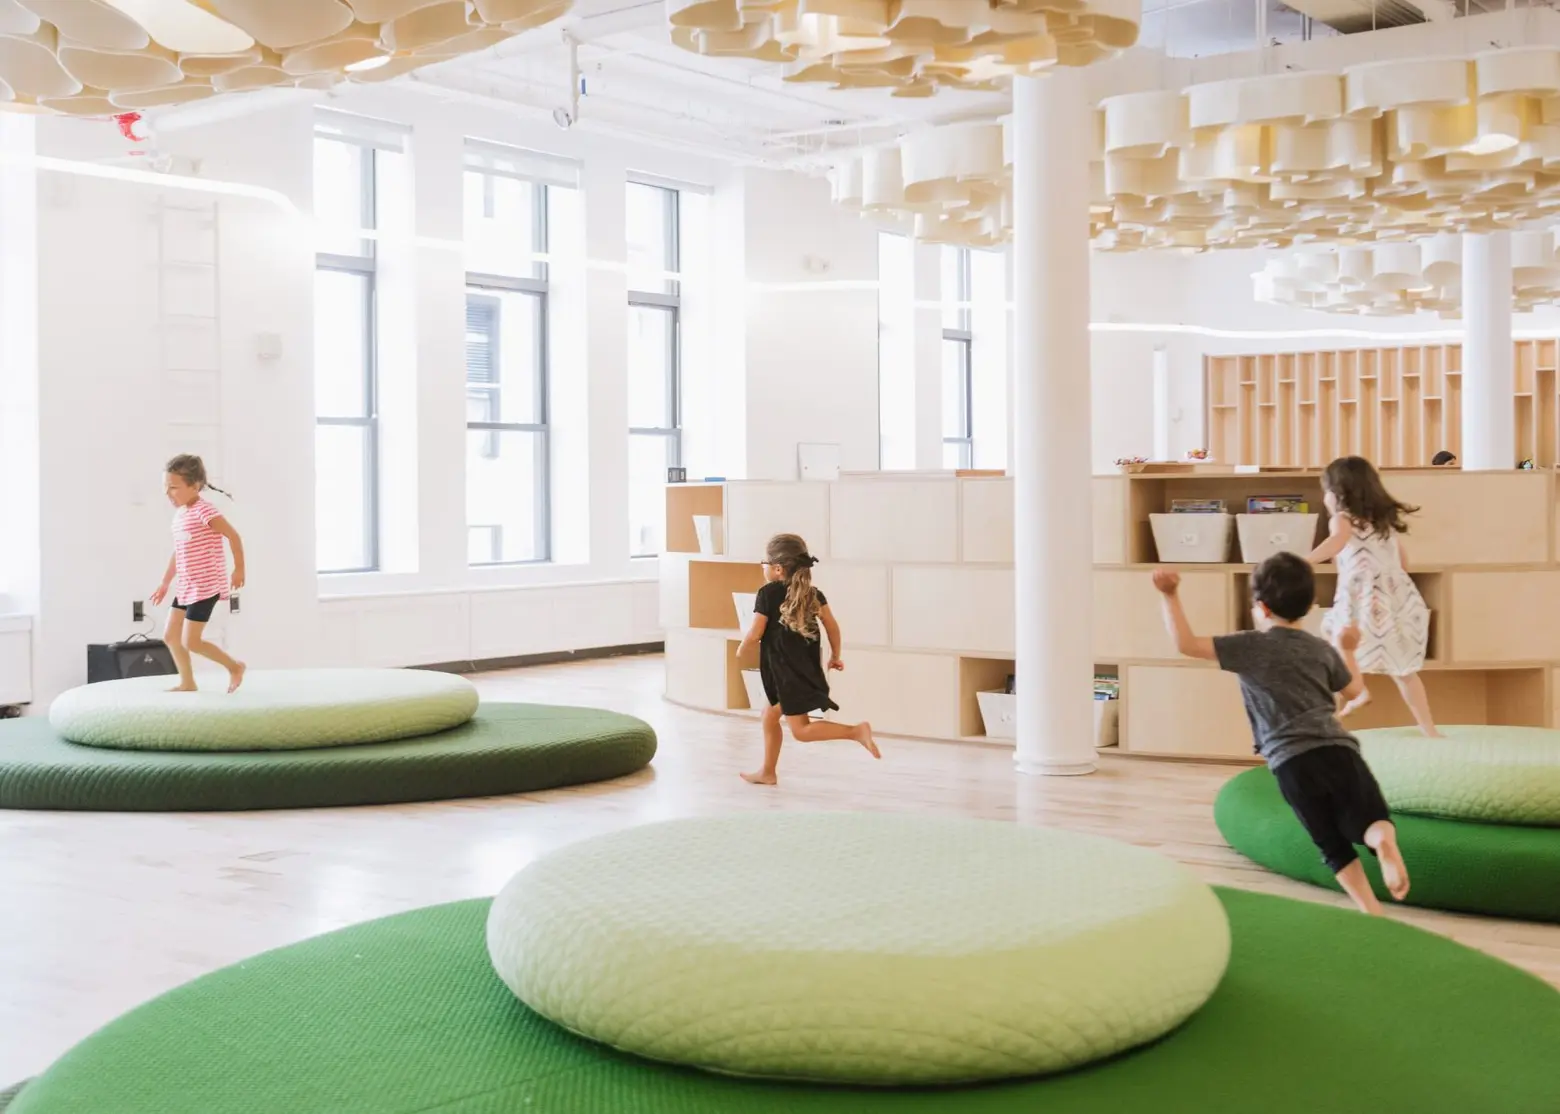 See inside WeWork’s first elementary school in NYC designed by Bjarke Ingels